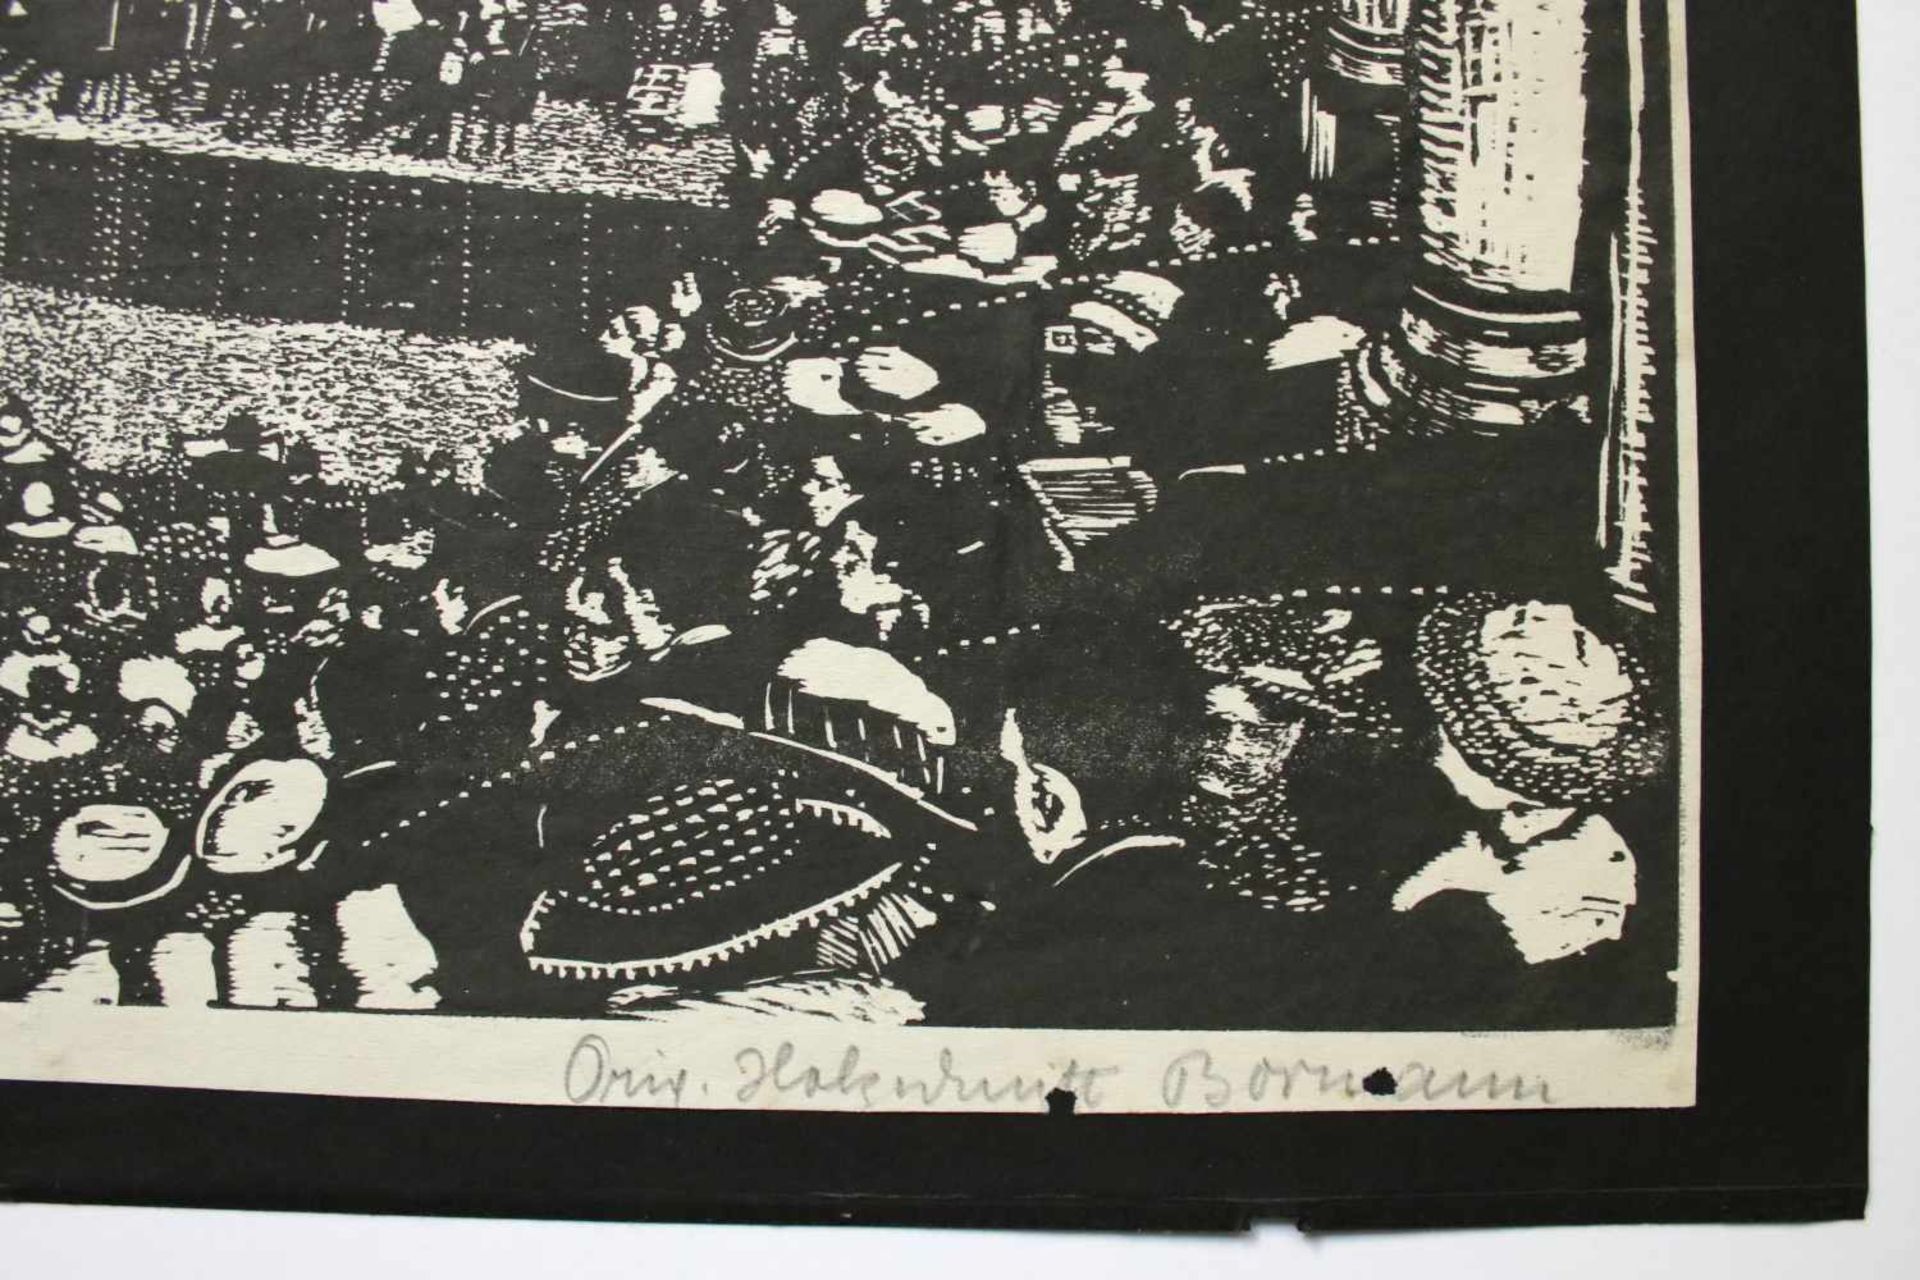 Bormann Emma1887-1974Concerto GrossoHolzschnitt auf Papier, handsigniert40 x 56 cm - Bild 2 aus 2